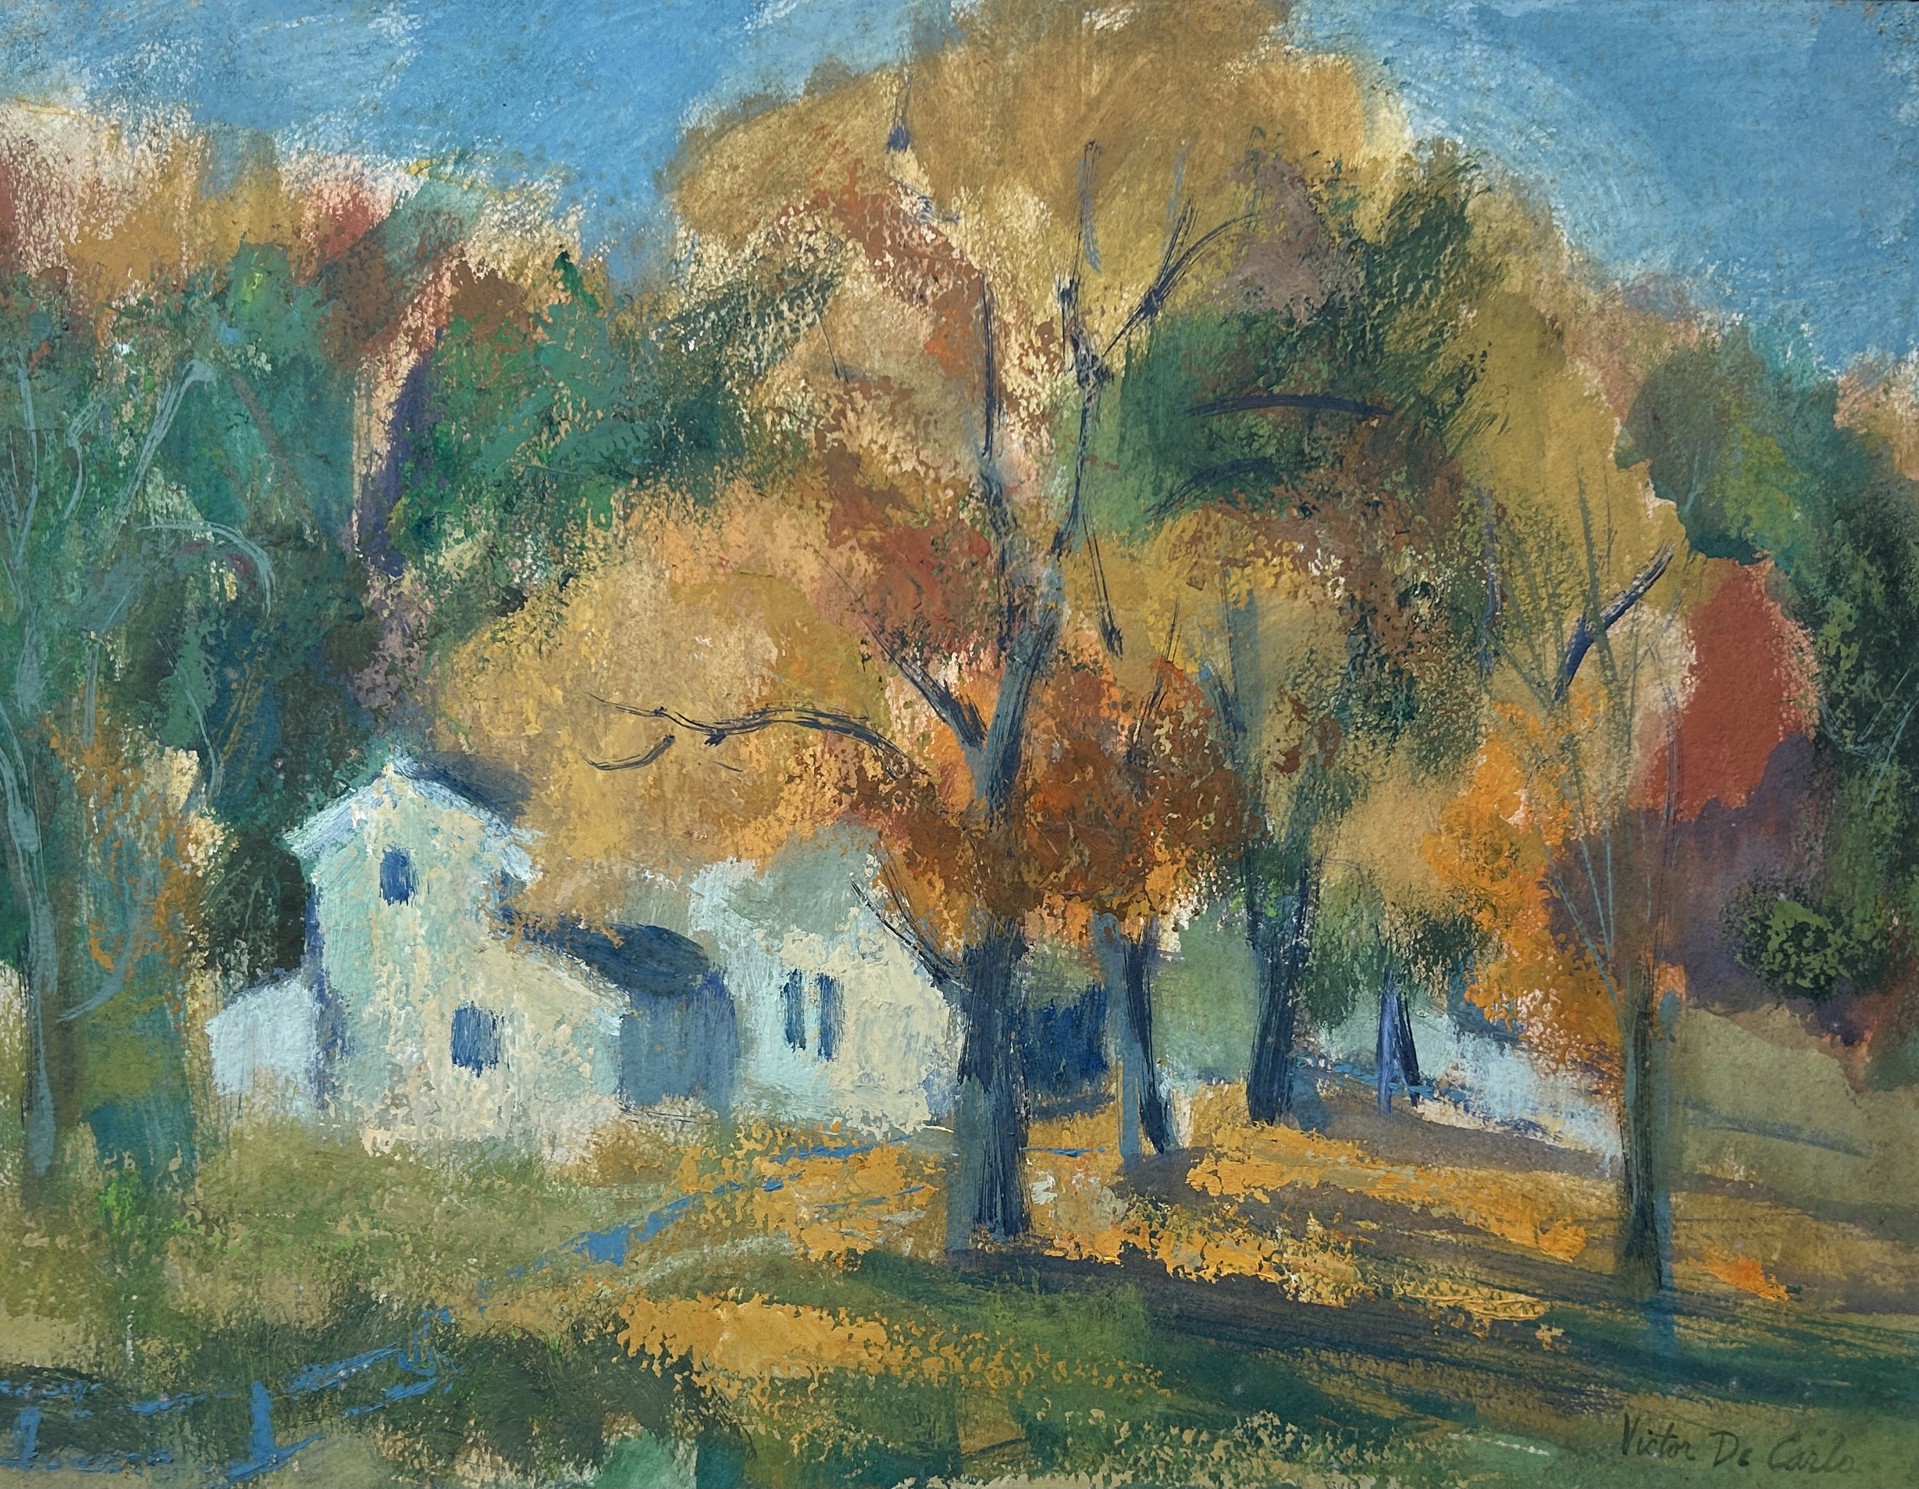 Autumn in Connecticut by Victor De Carlo